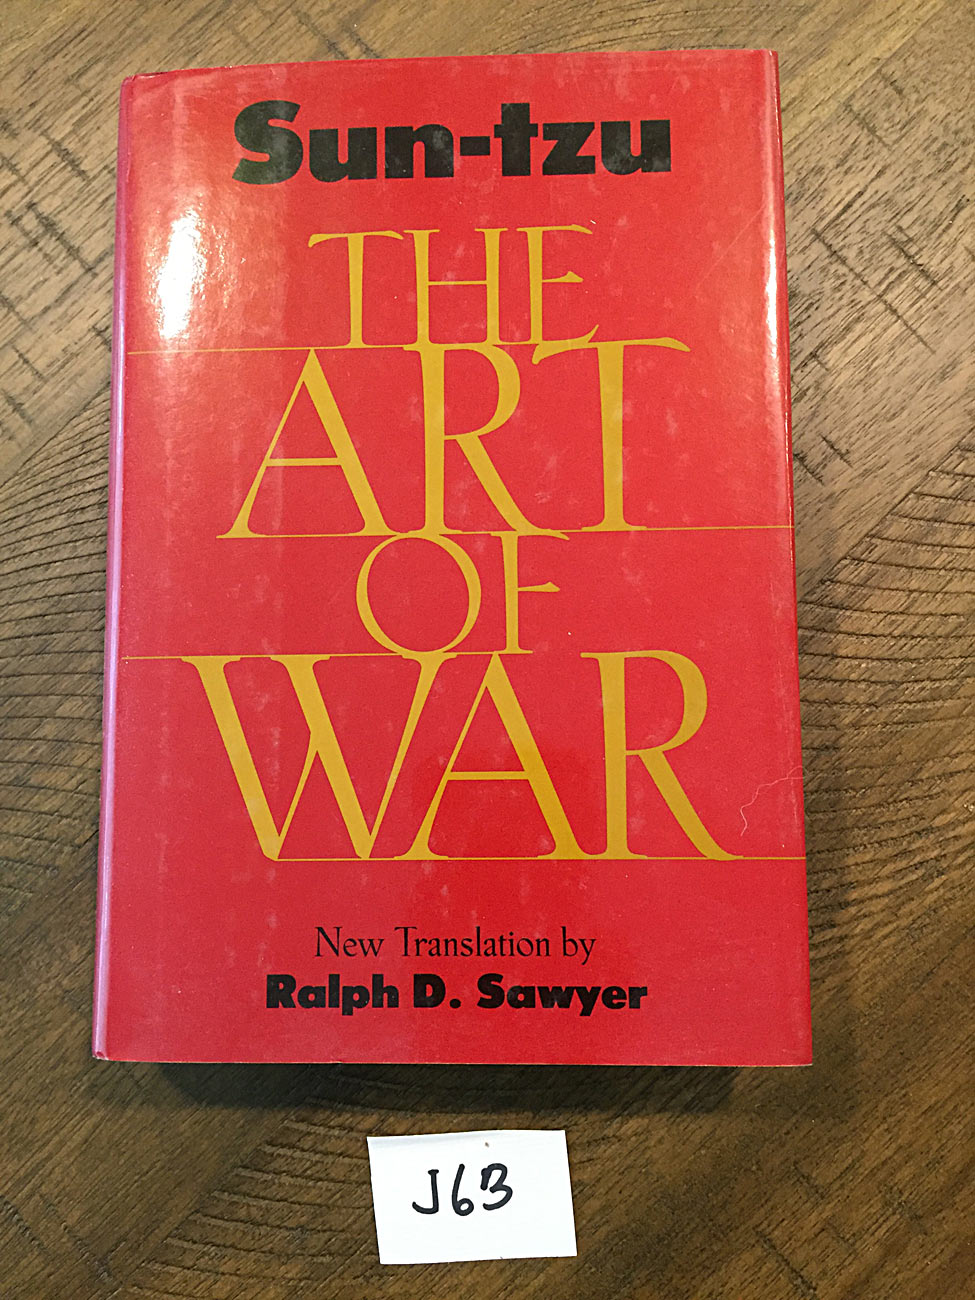 The Art of War: New Translation by Ralph D. Sawyer – Author Sun-tzu [J63]